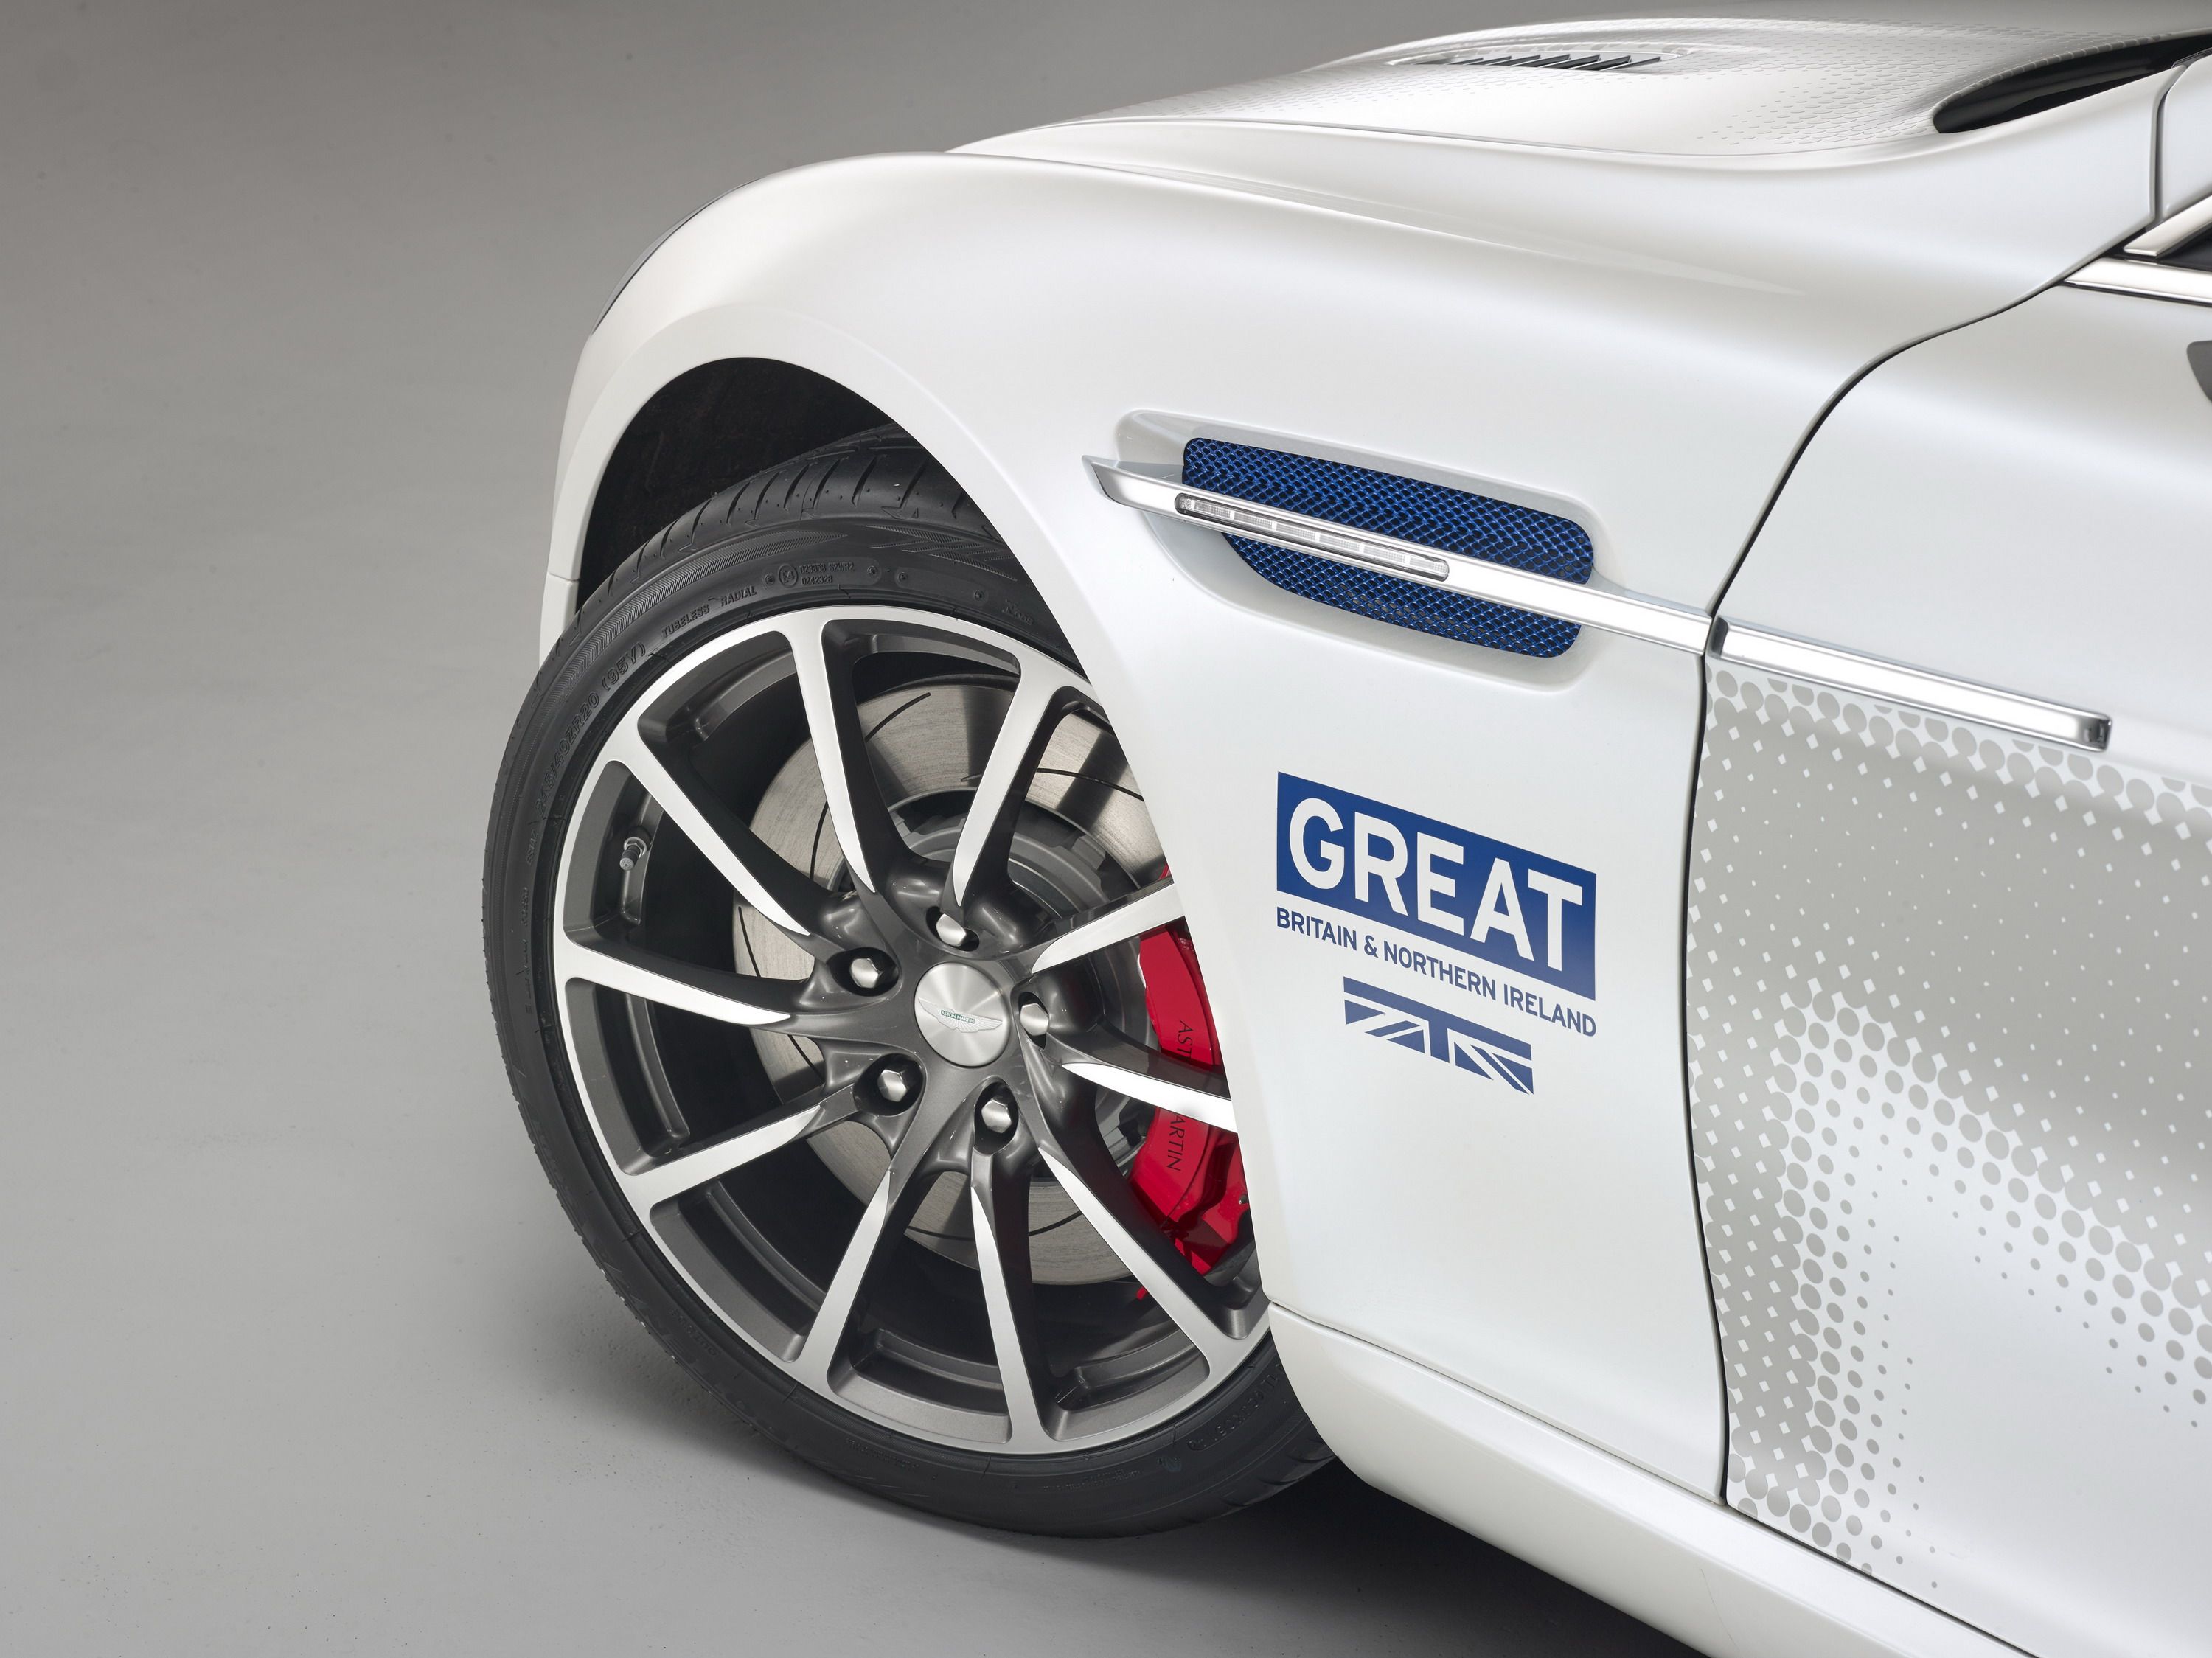 2015 Aston Martin Rapide S GREAT Edition